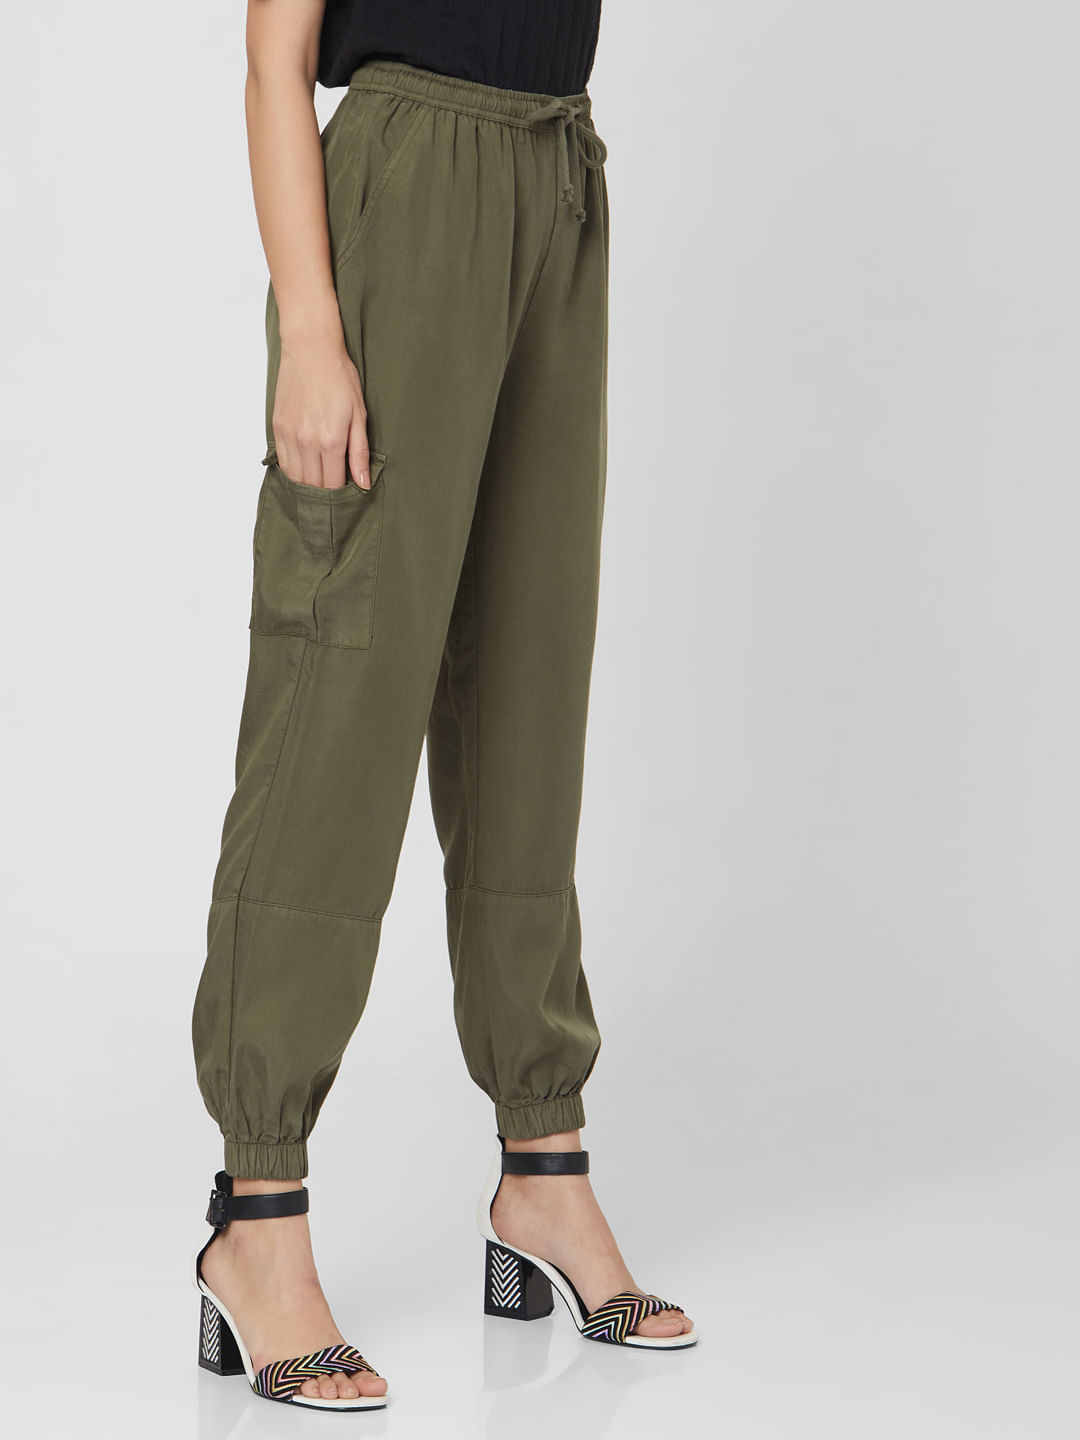 Good American Women's Good Leg Olive Green Cargo pants Faux suede Size 8/29  | eBay